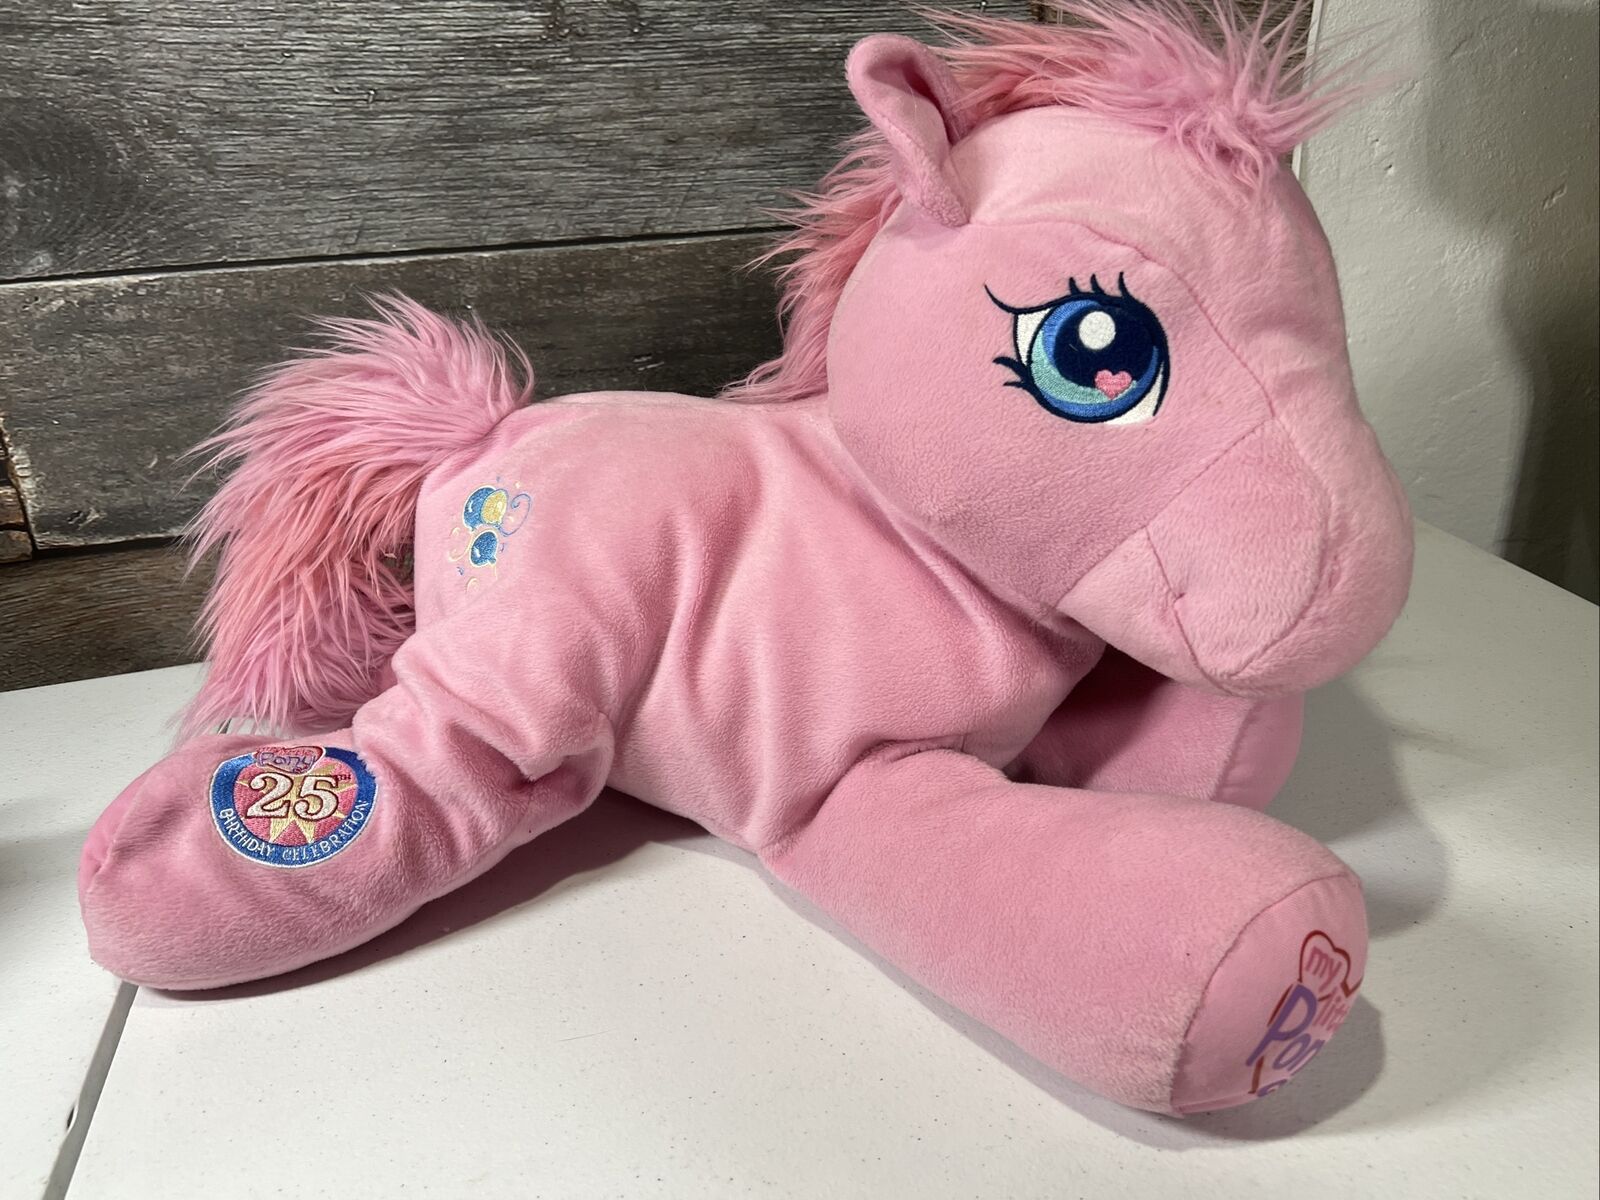 2007 Hasbro My little pony 25th Birthday Celebration limited edition Pinkie Pie